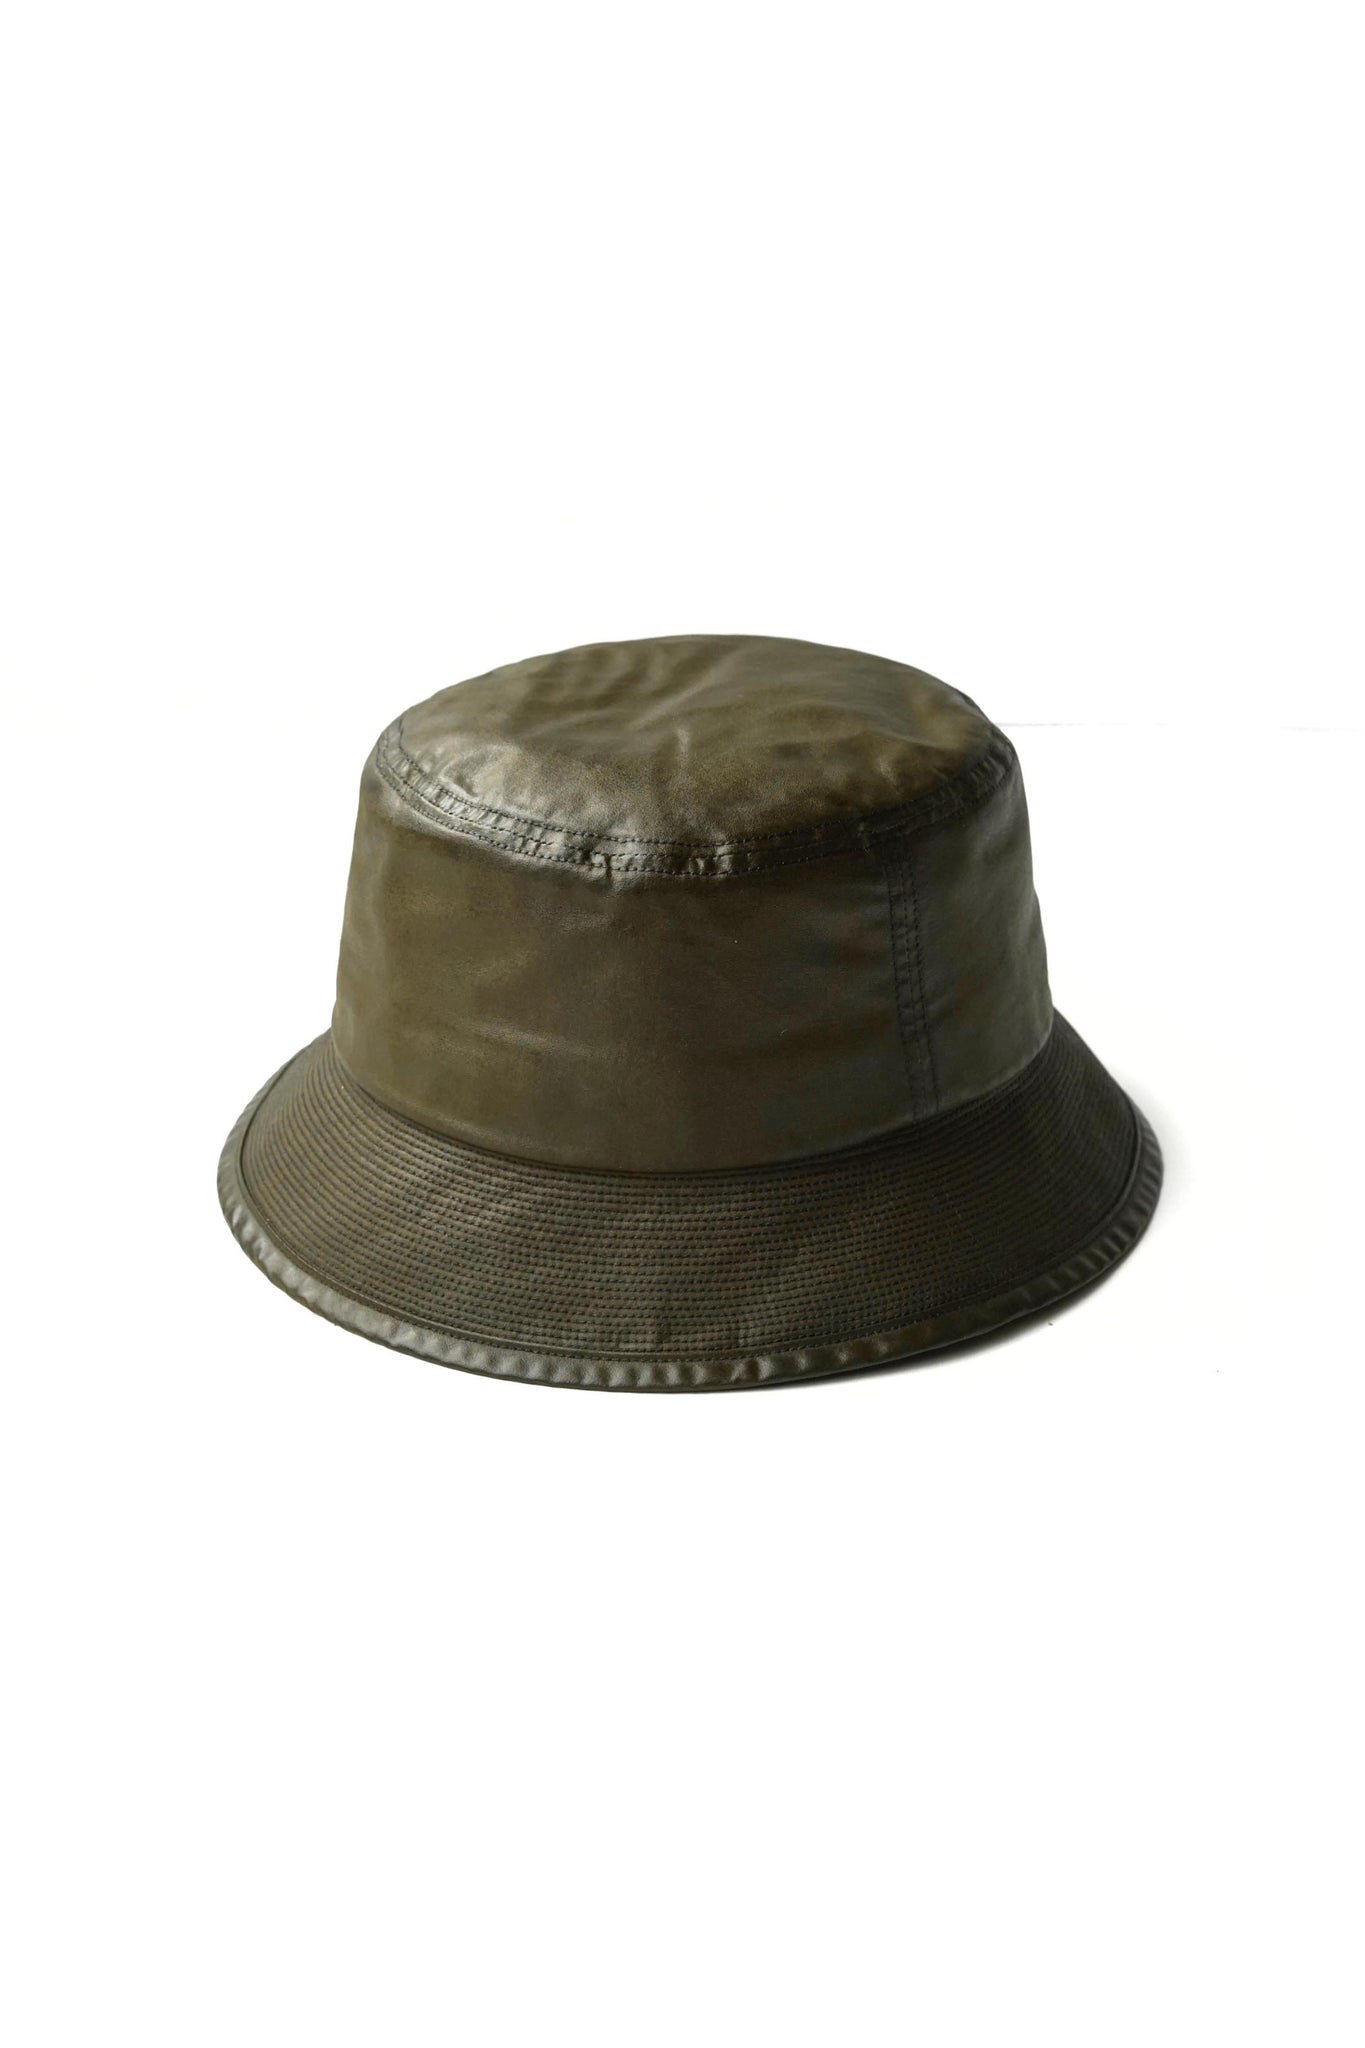 〈 SPOT 〉PATINA OILED CLOTH BUCKET HAT - 222OJ-HT06 